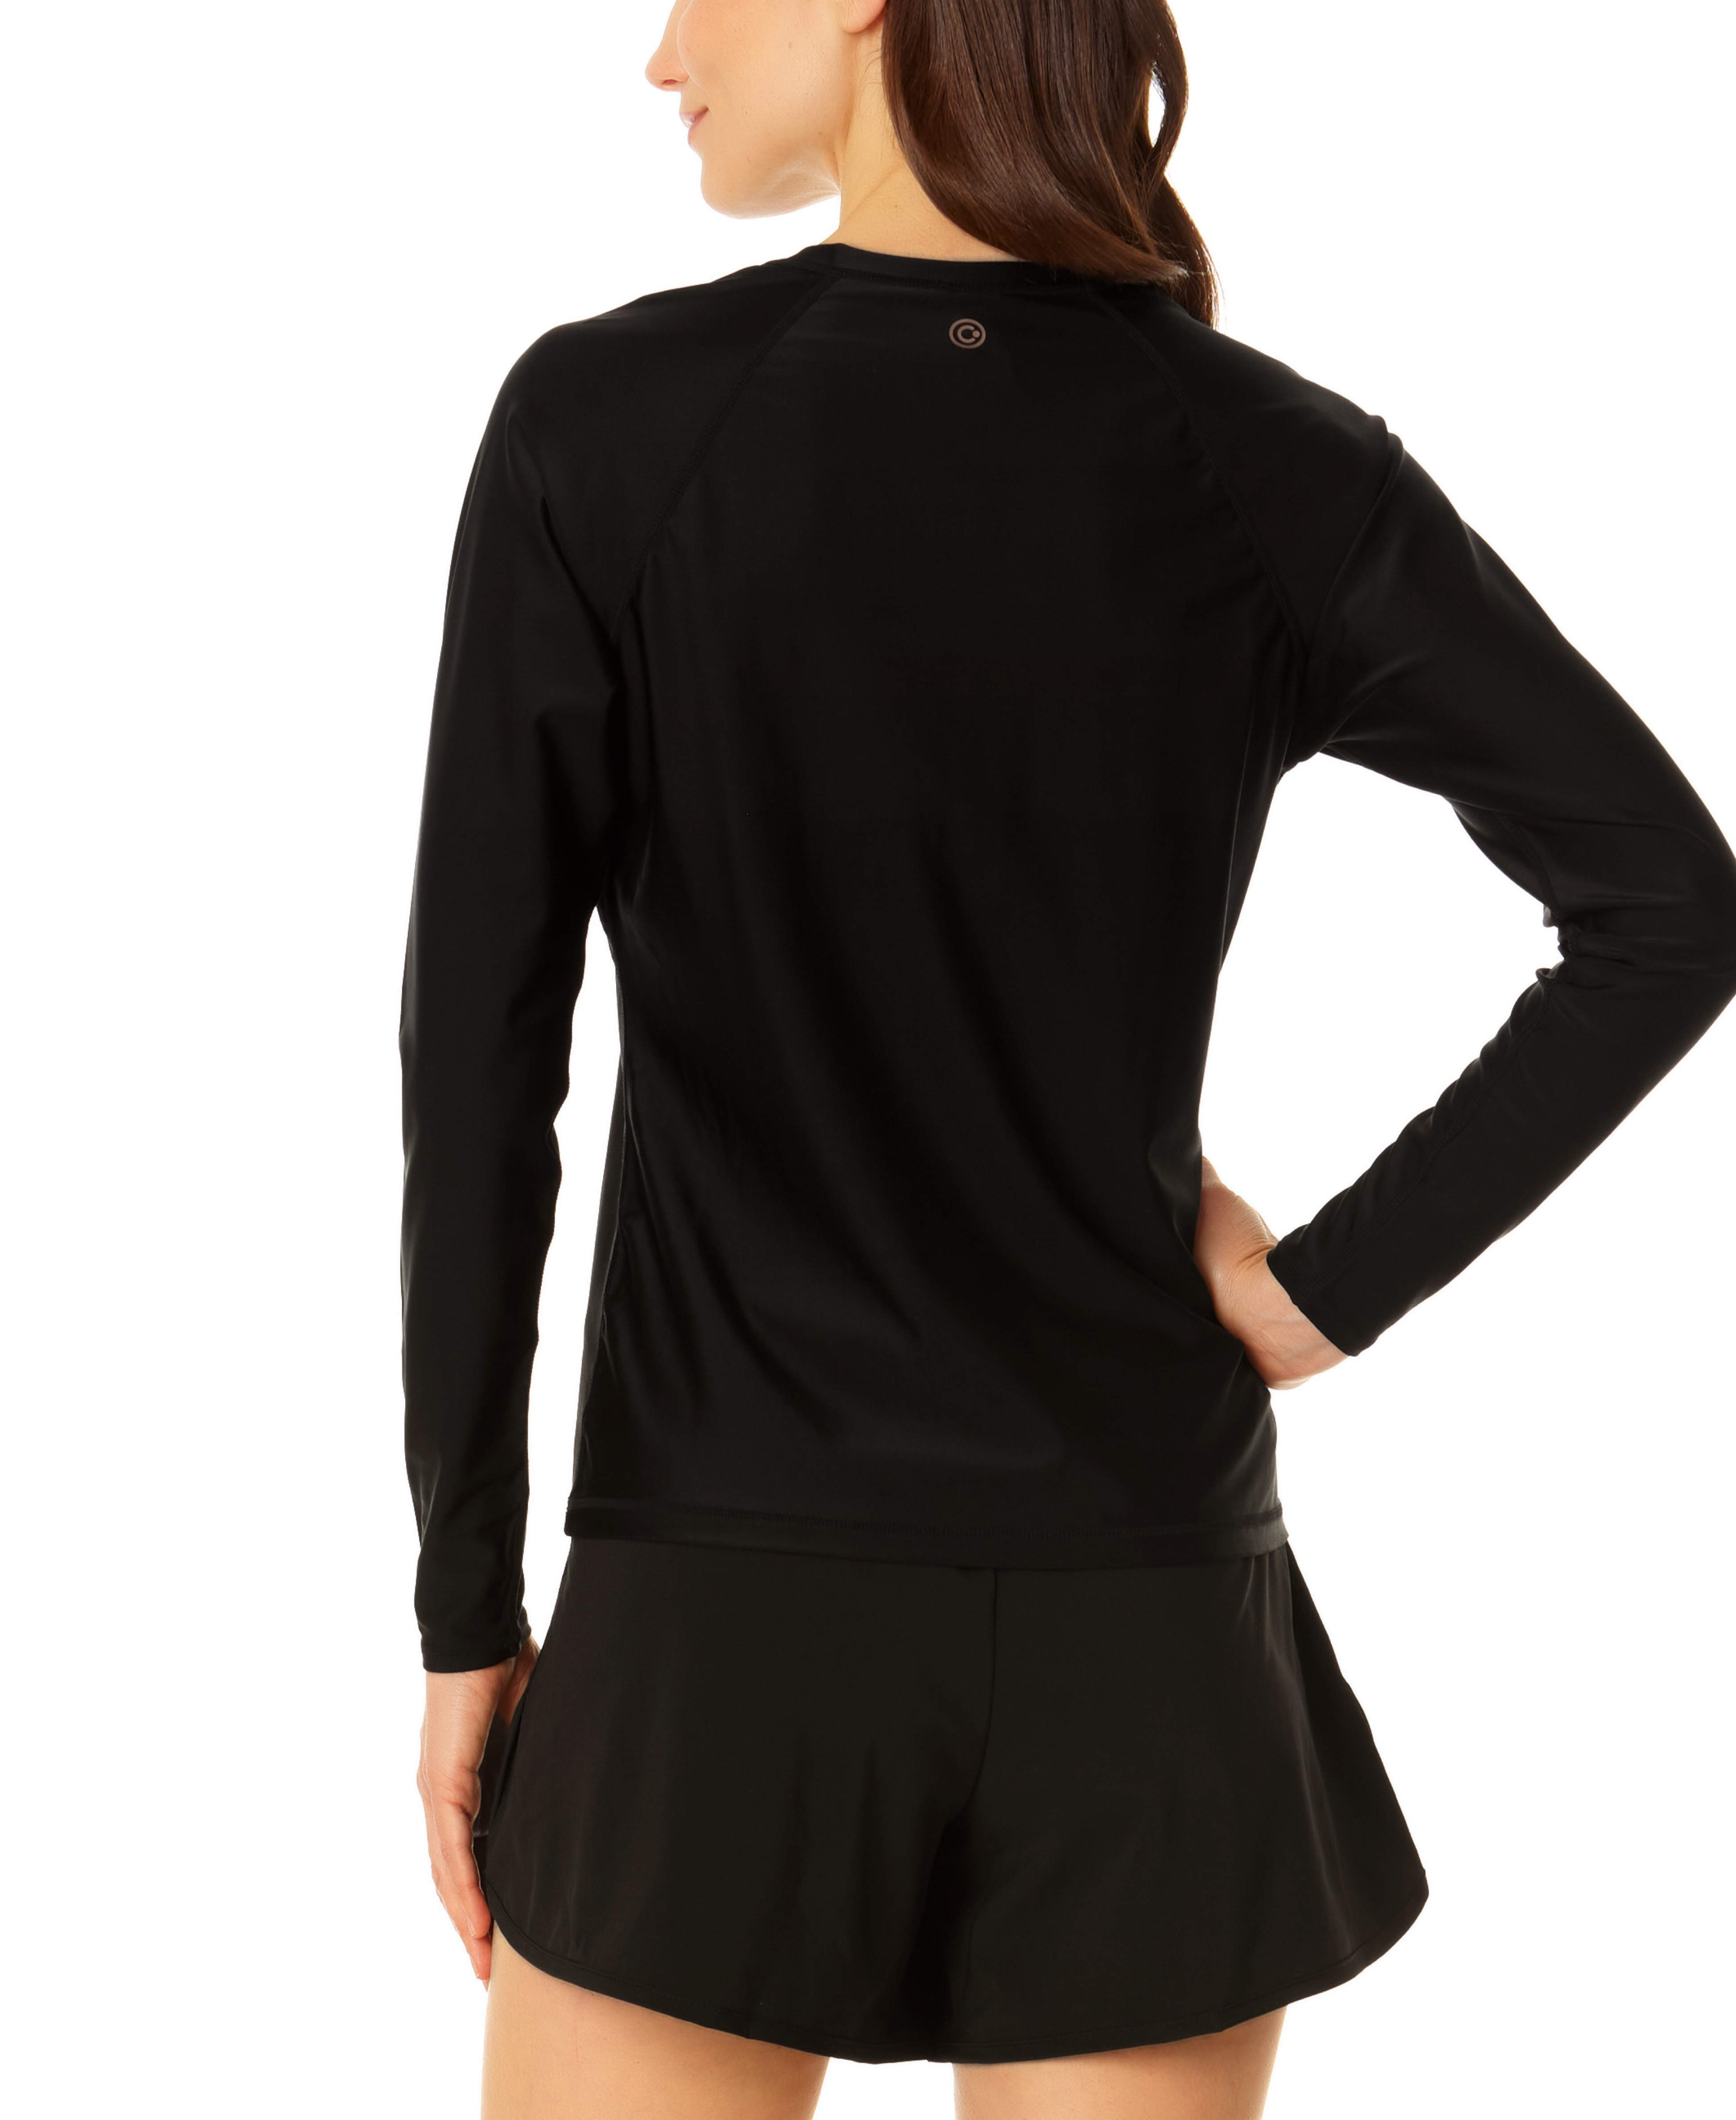 Women's Short Sleeve Zip Front Rashguard Swim Top in Black